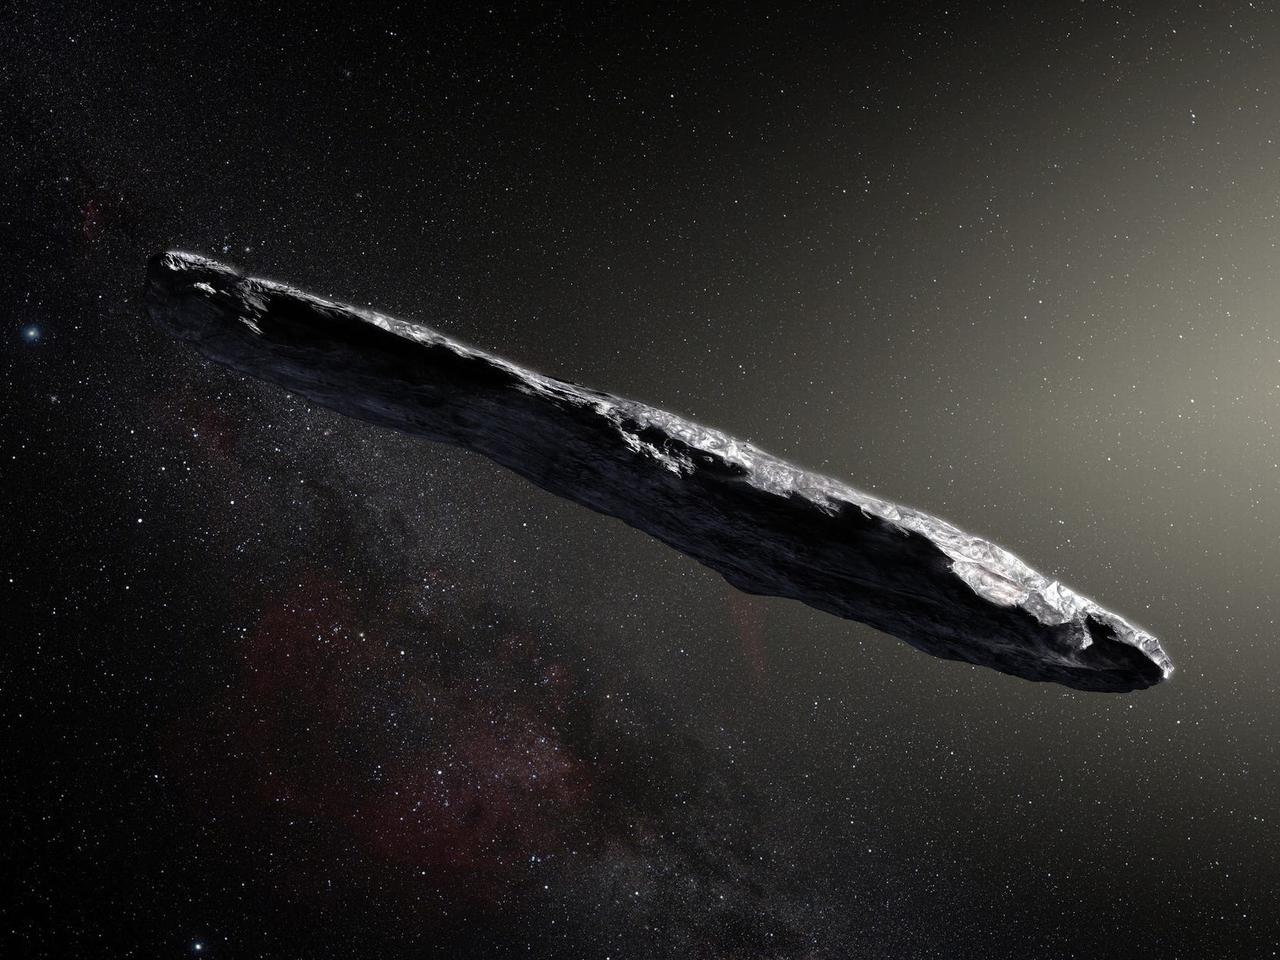 An artist's impression of interstellar object 'Oumuamua